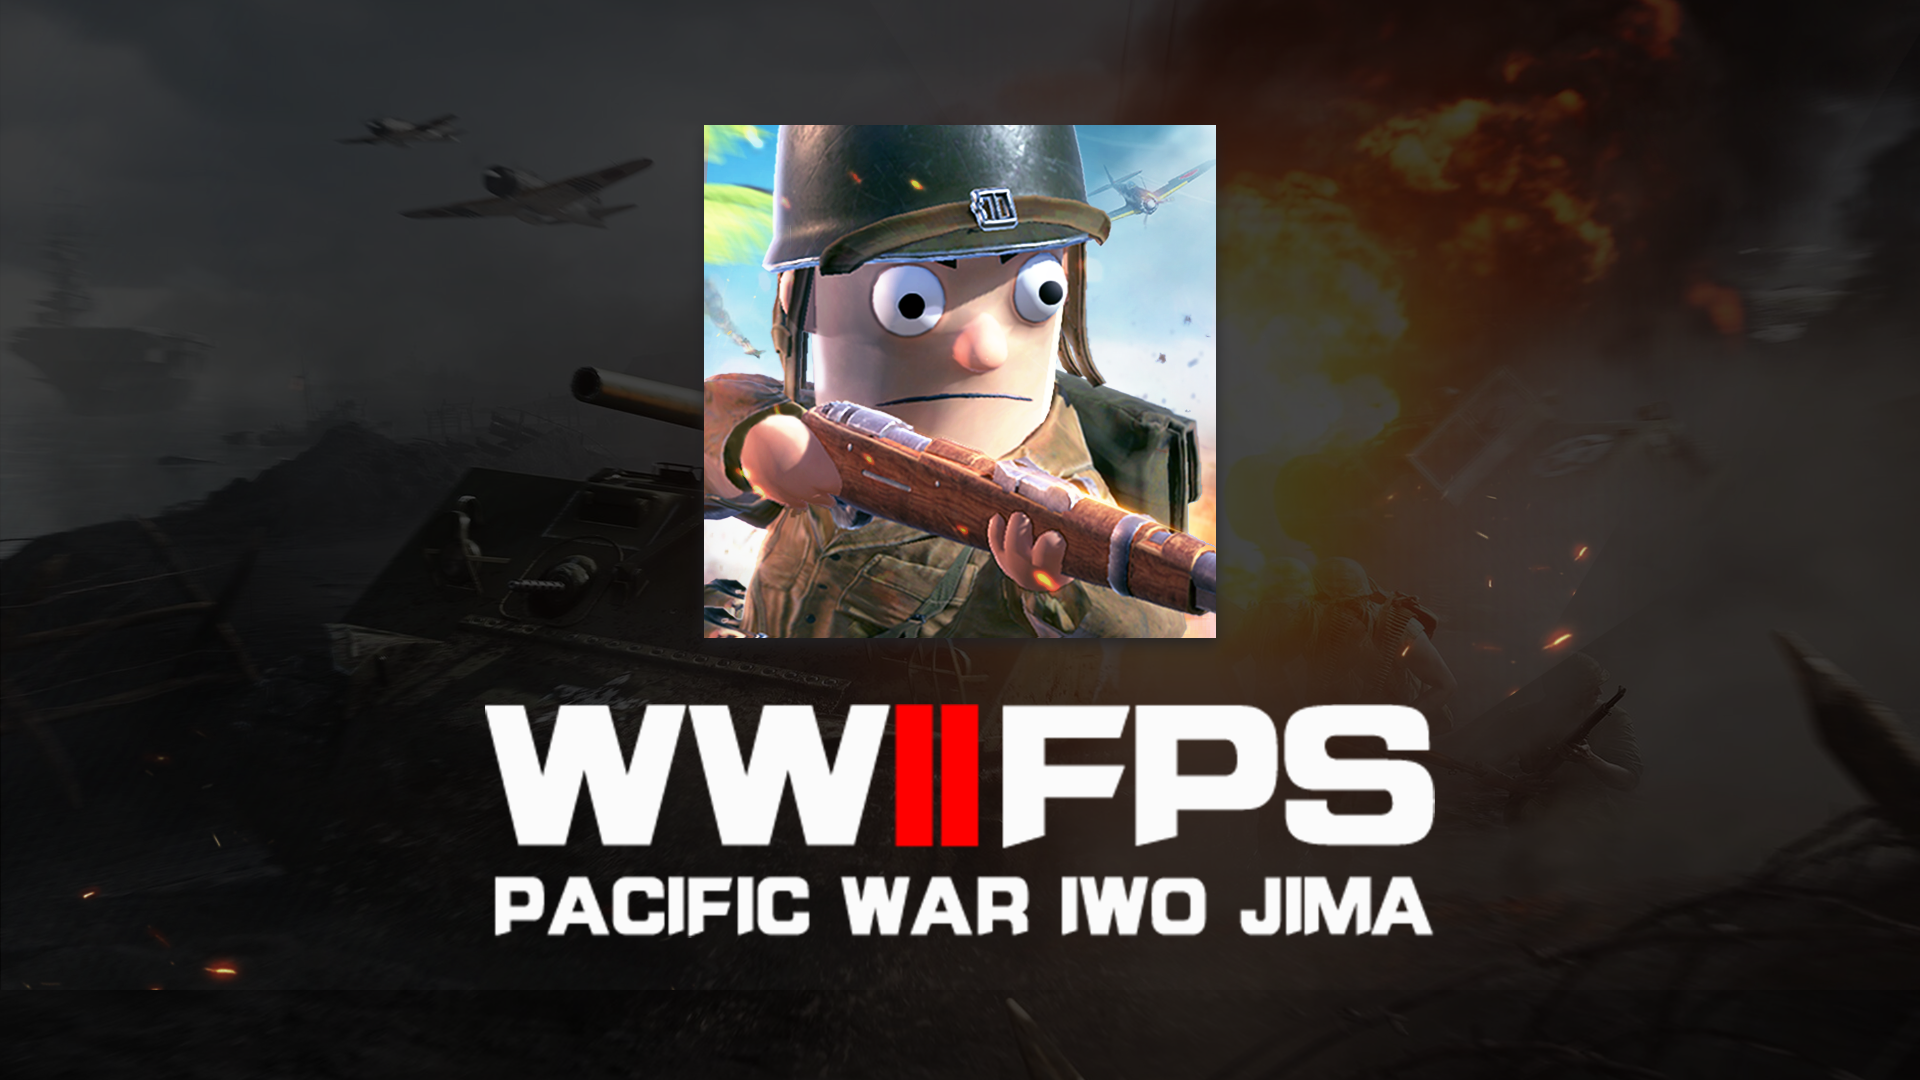 Pacifix War Iwo Jima:WW2 fpsのキャプチャ